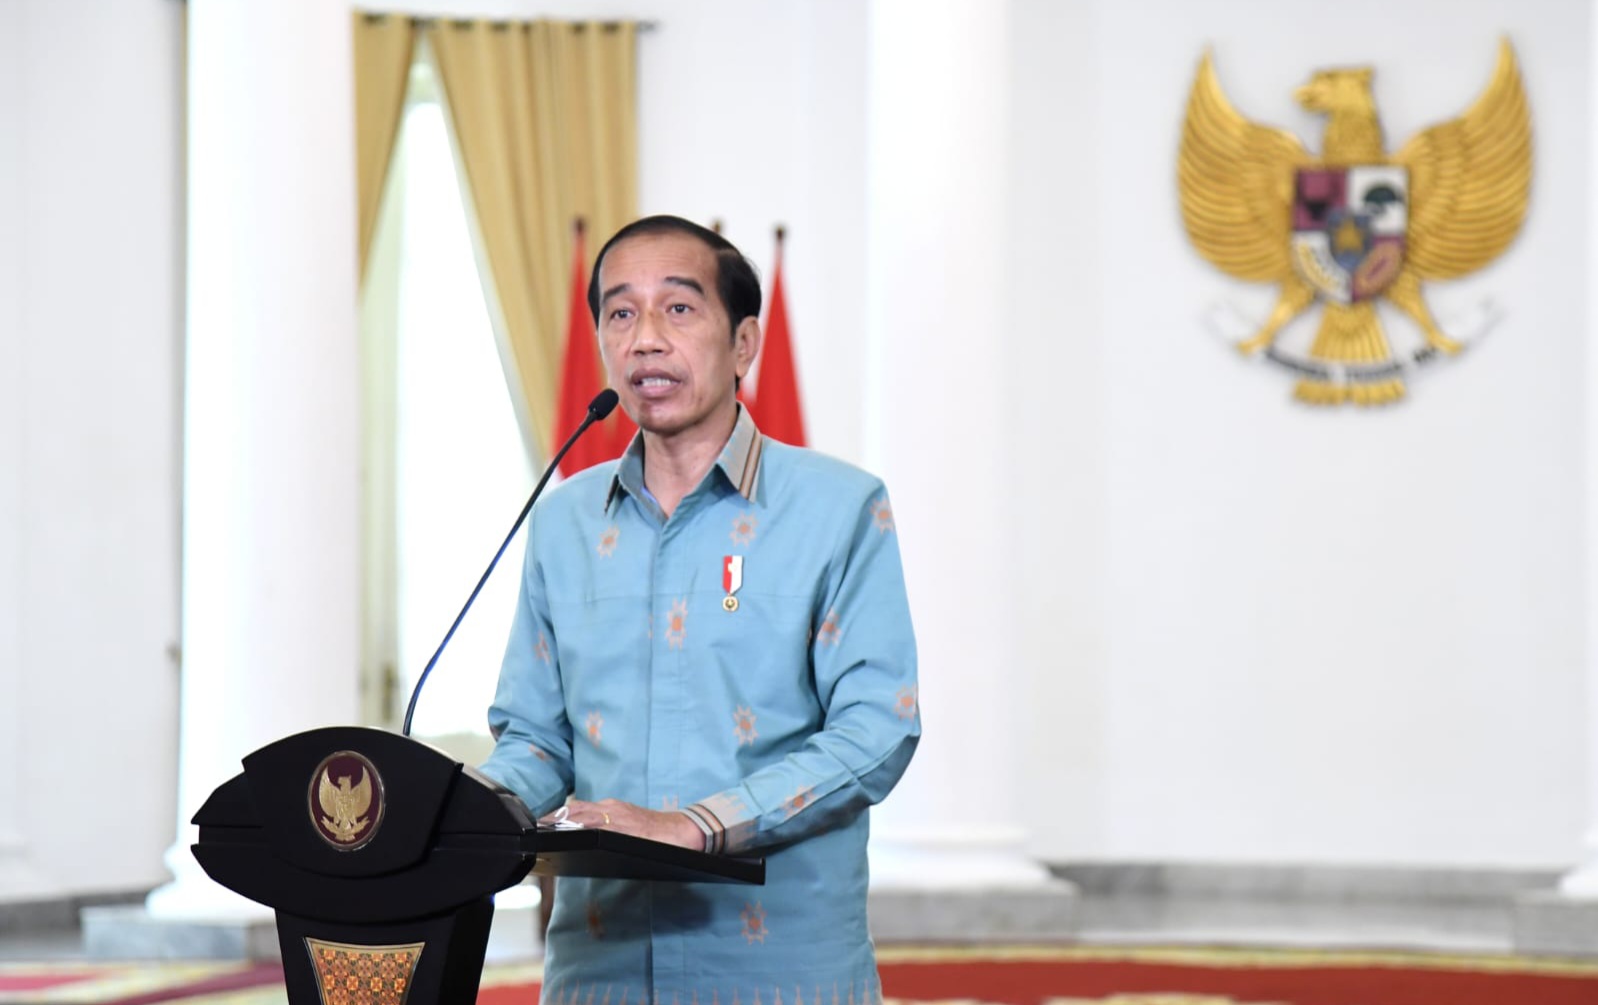 Motif Khas dan Berkualitas Tinggi, Kain Tenun Masalili Muna Pernah Dipakai Presiden Jokowi